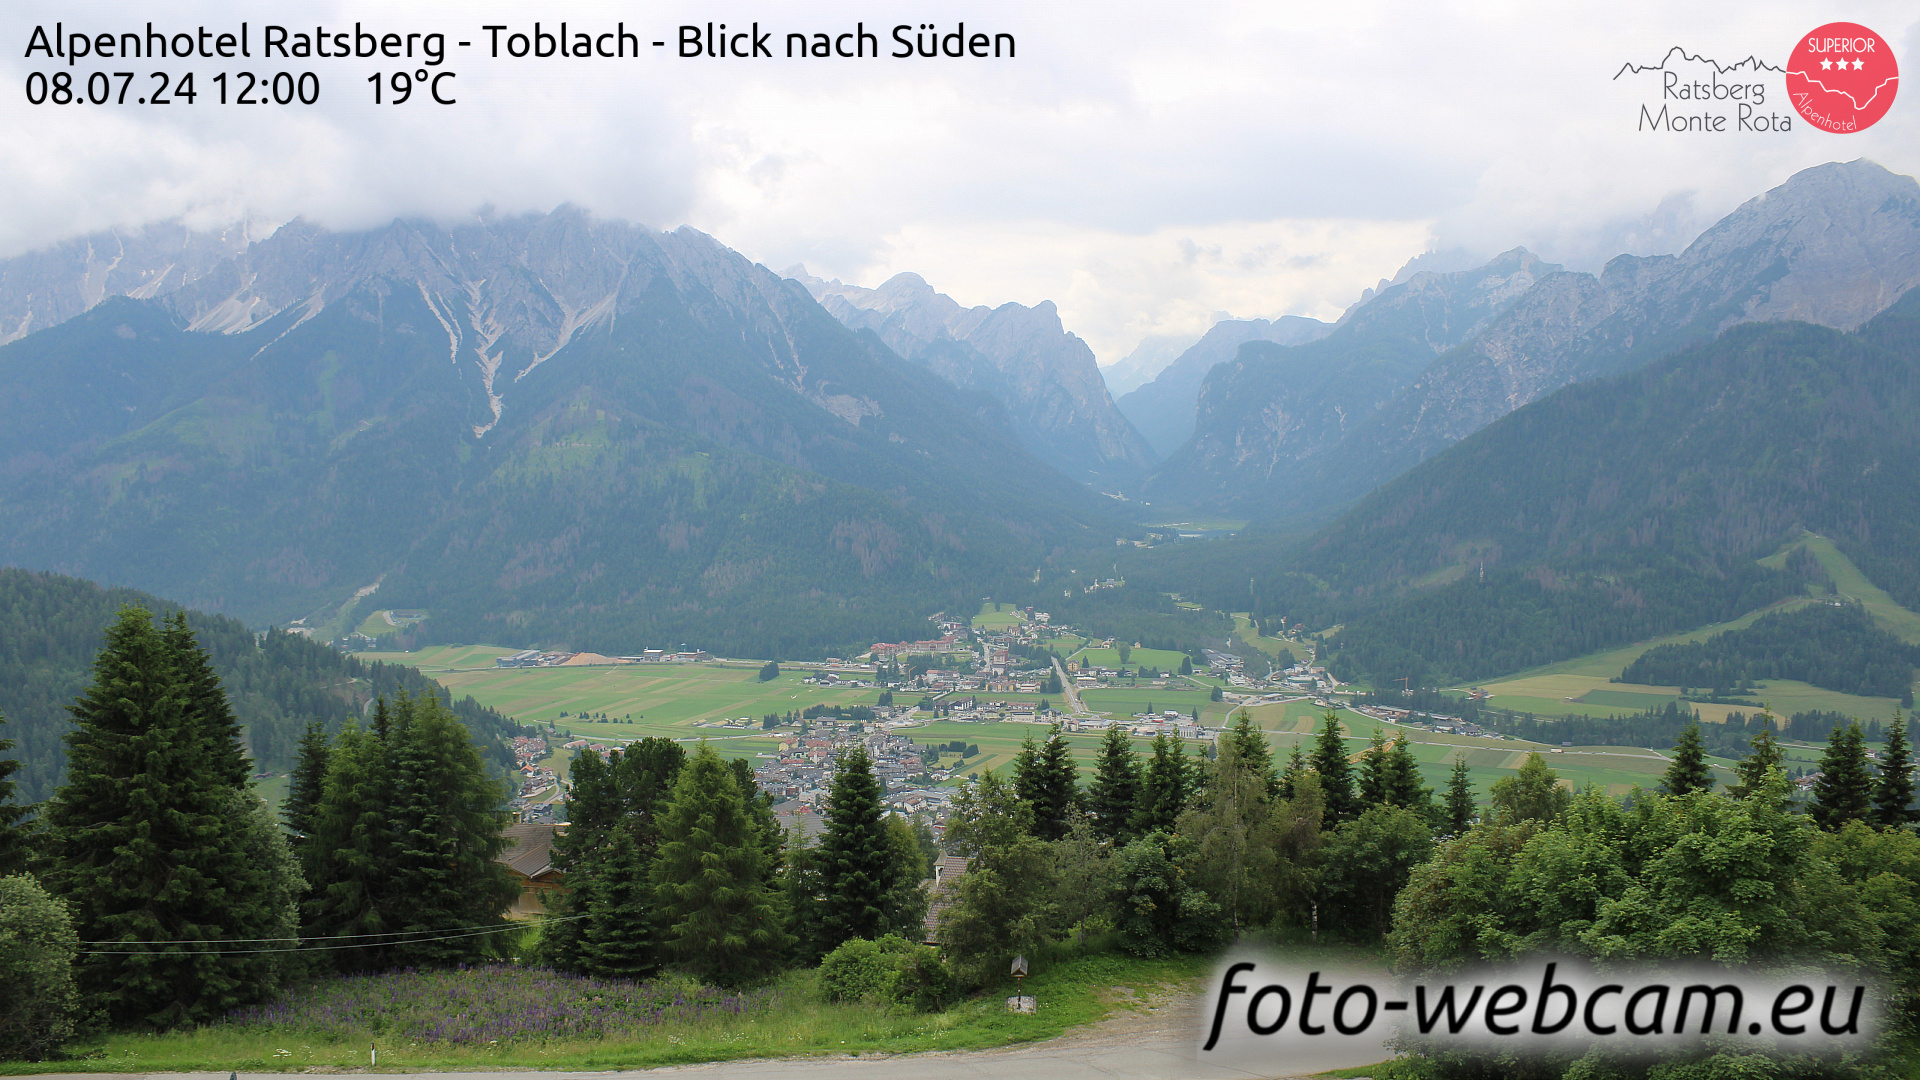 Toblach (Dolomites) Thu. 12:03